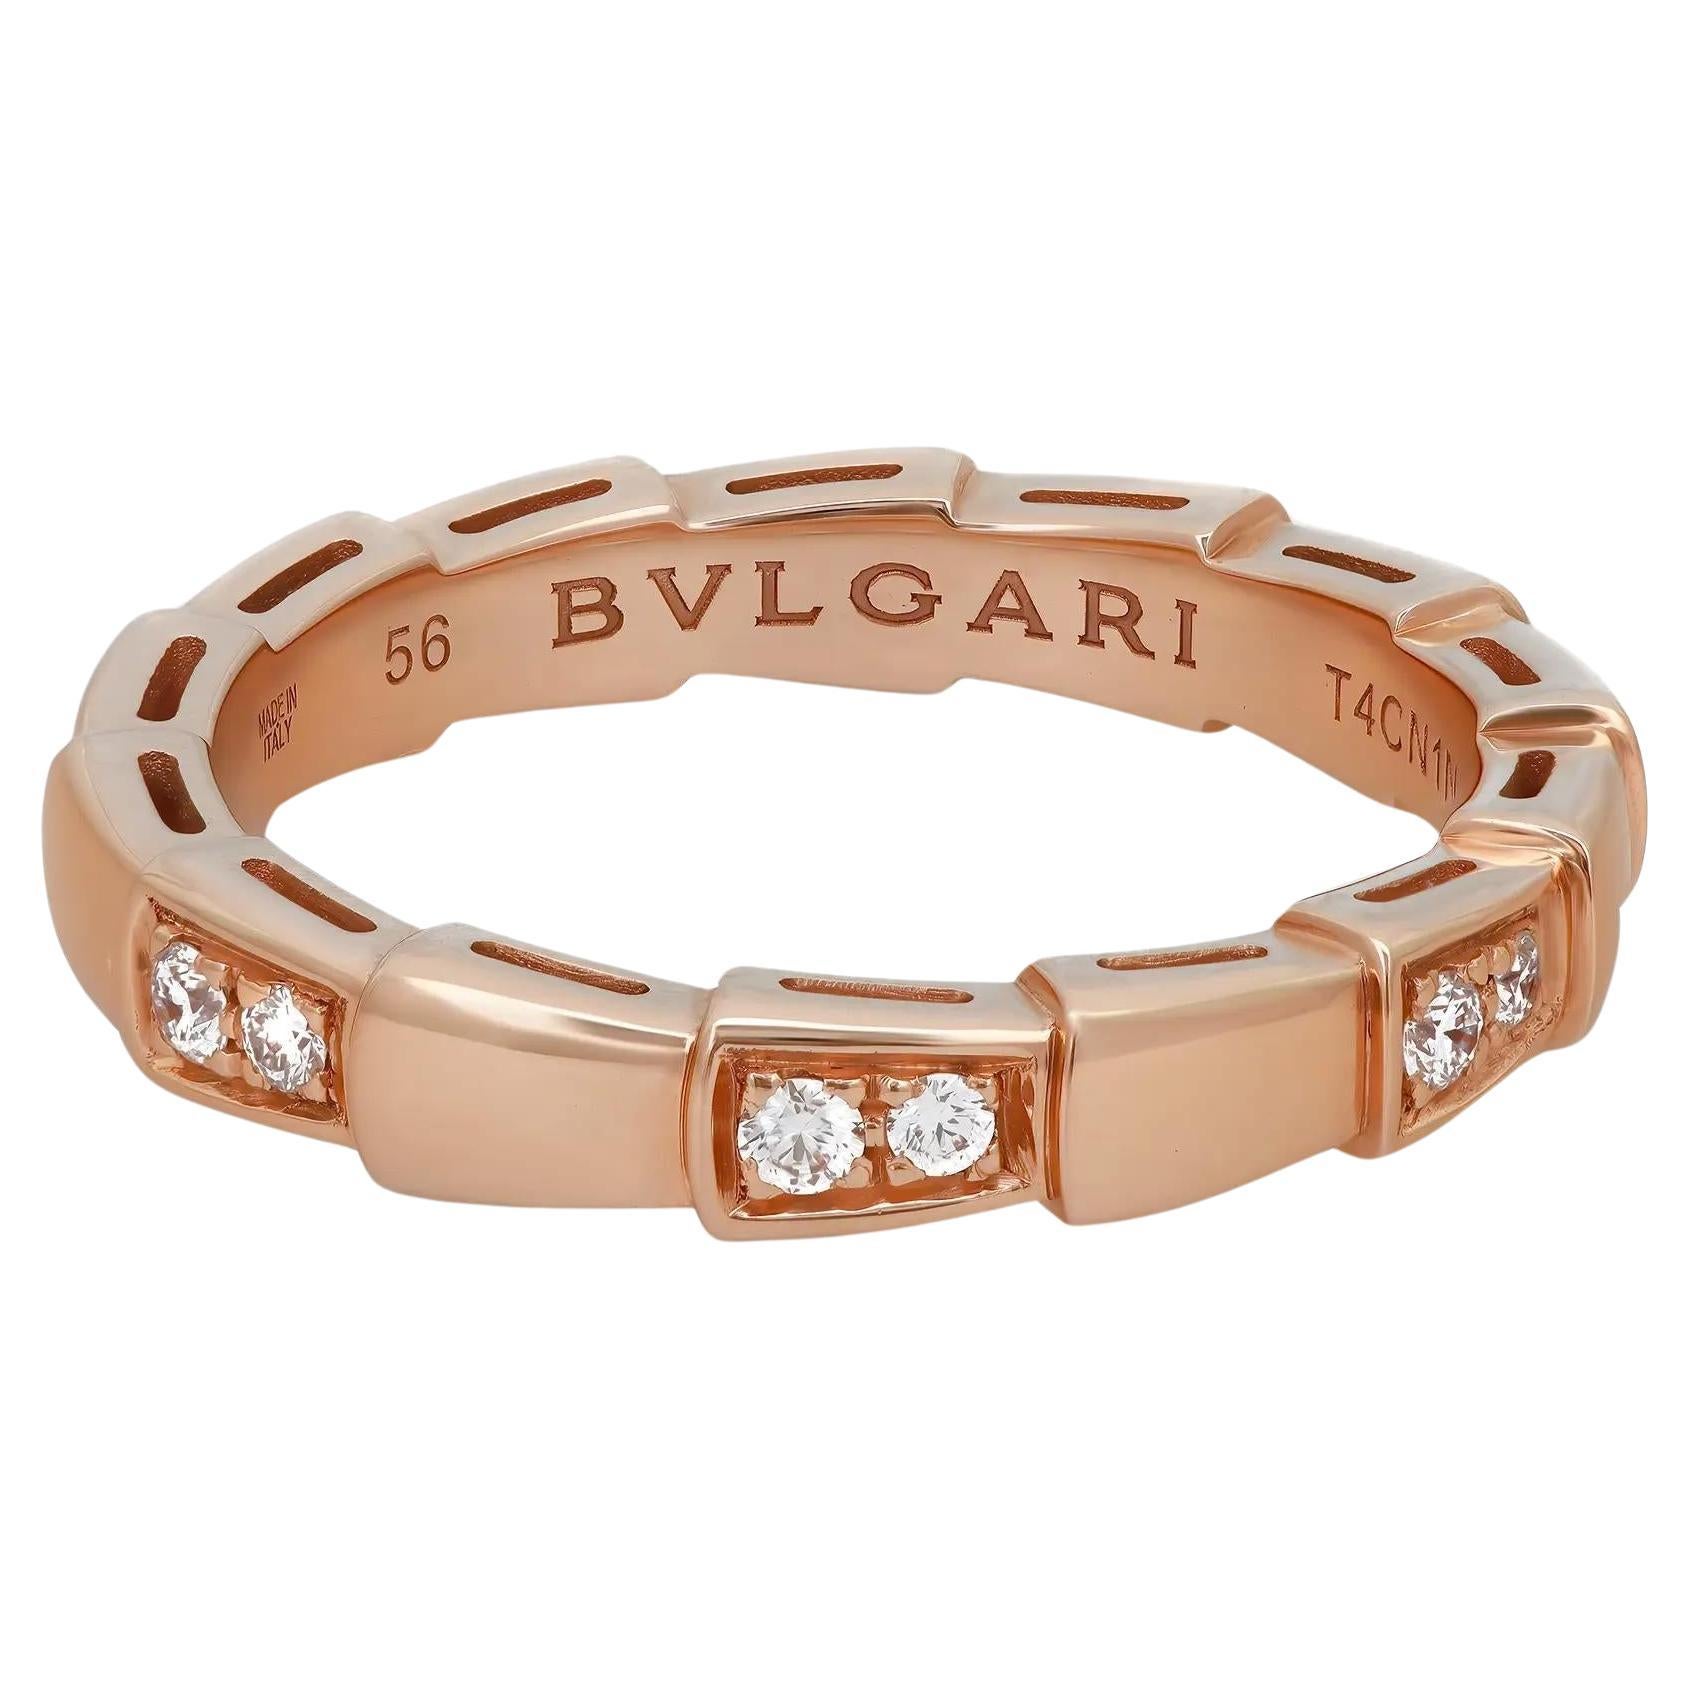 Bvlgari Serpenti Viper Diamond Band Ring 18K Rose Gold Size 56 US 7.75 For Sale